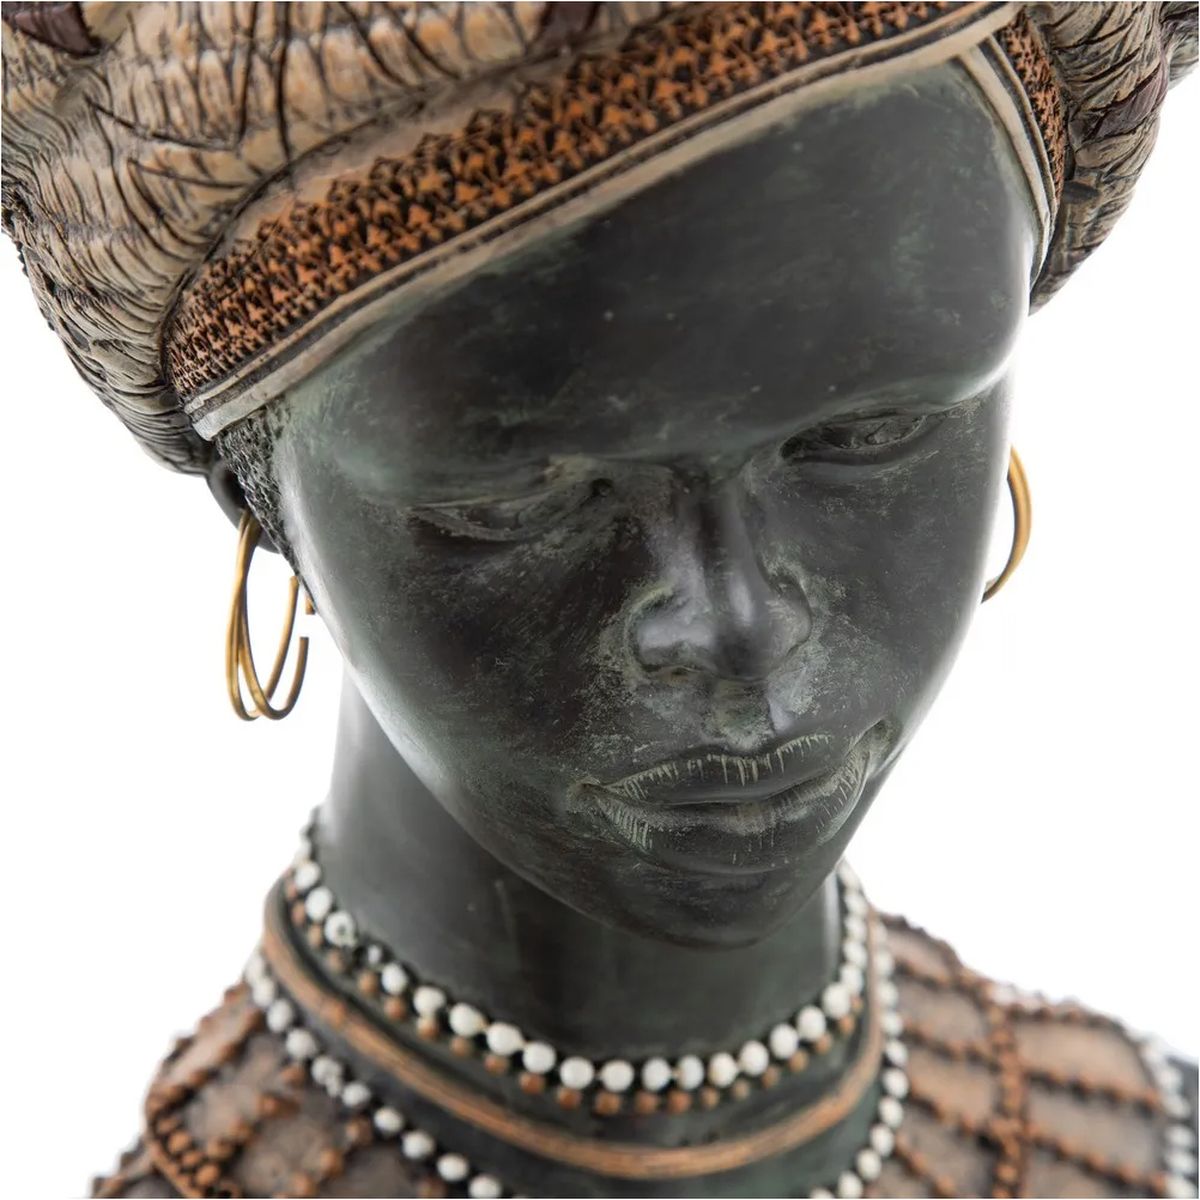 African woman decoration 50 cm